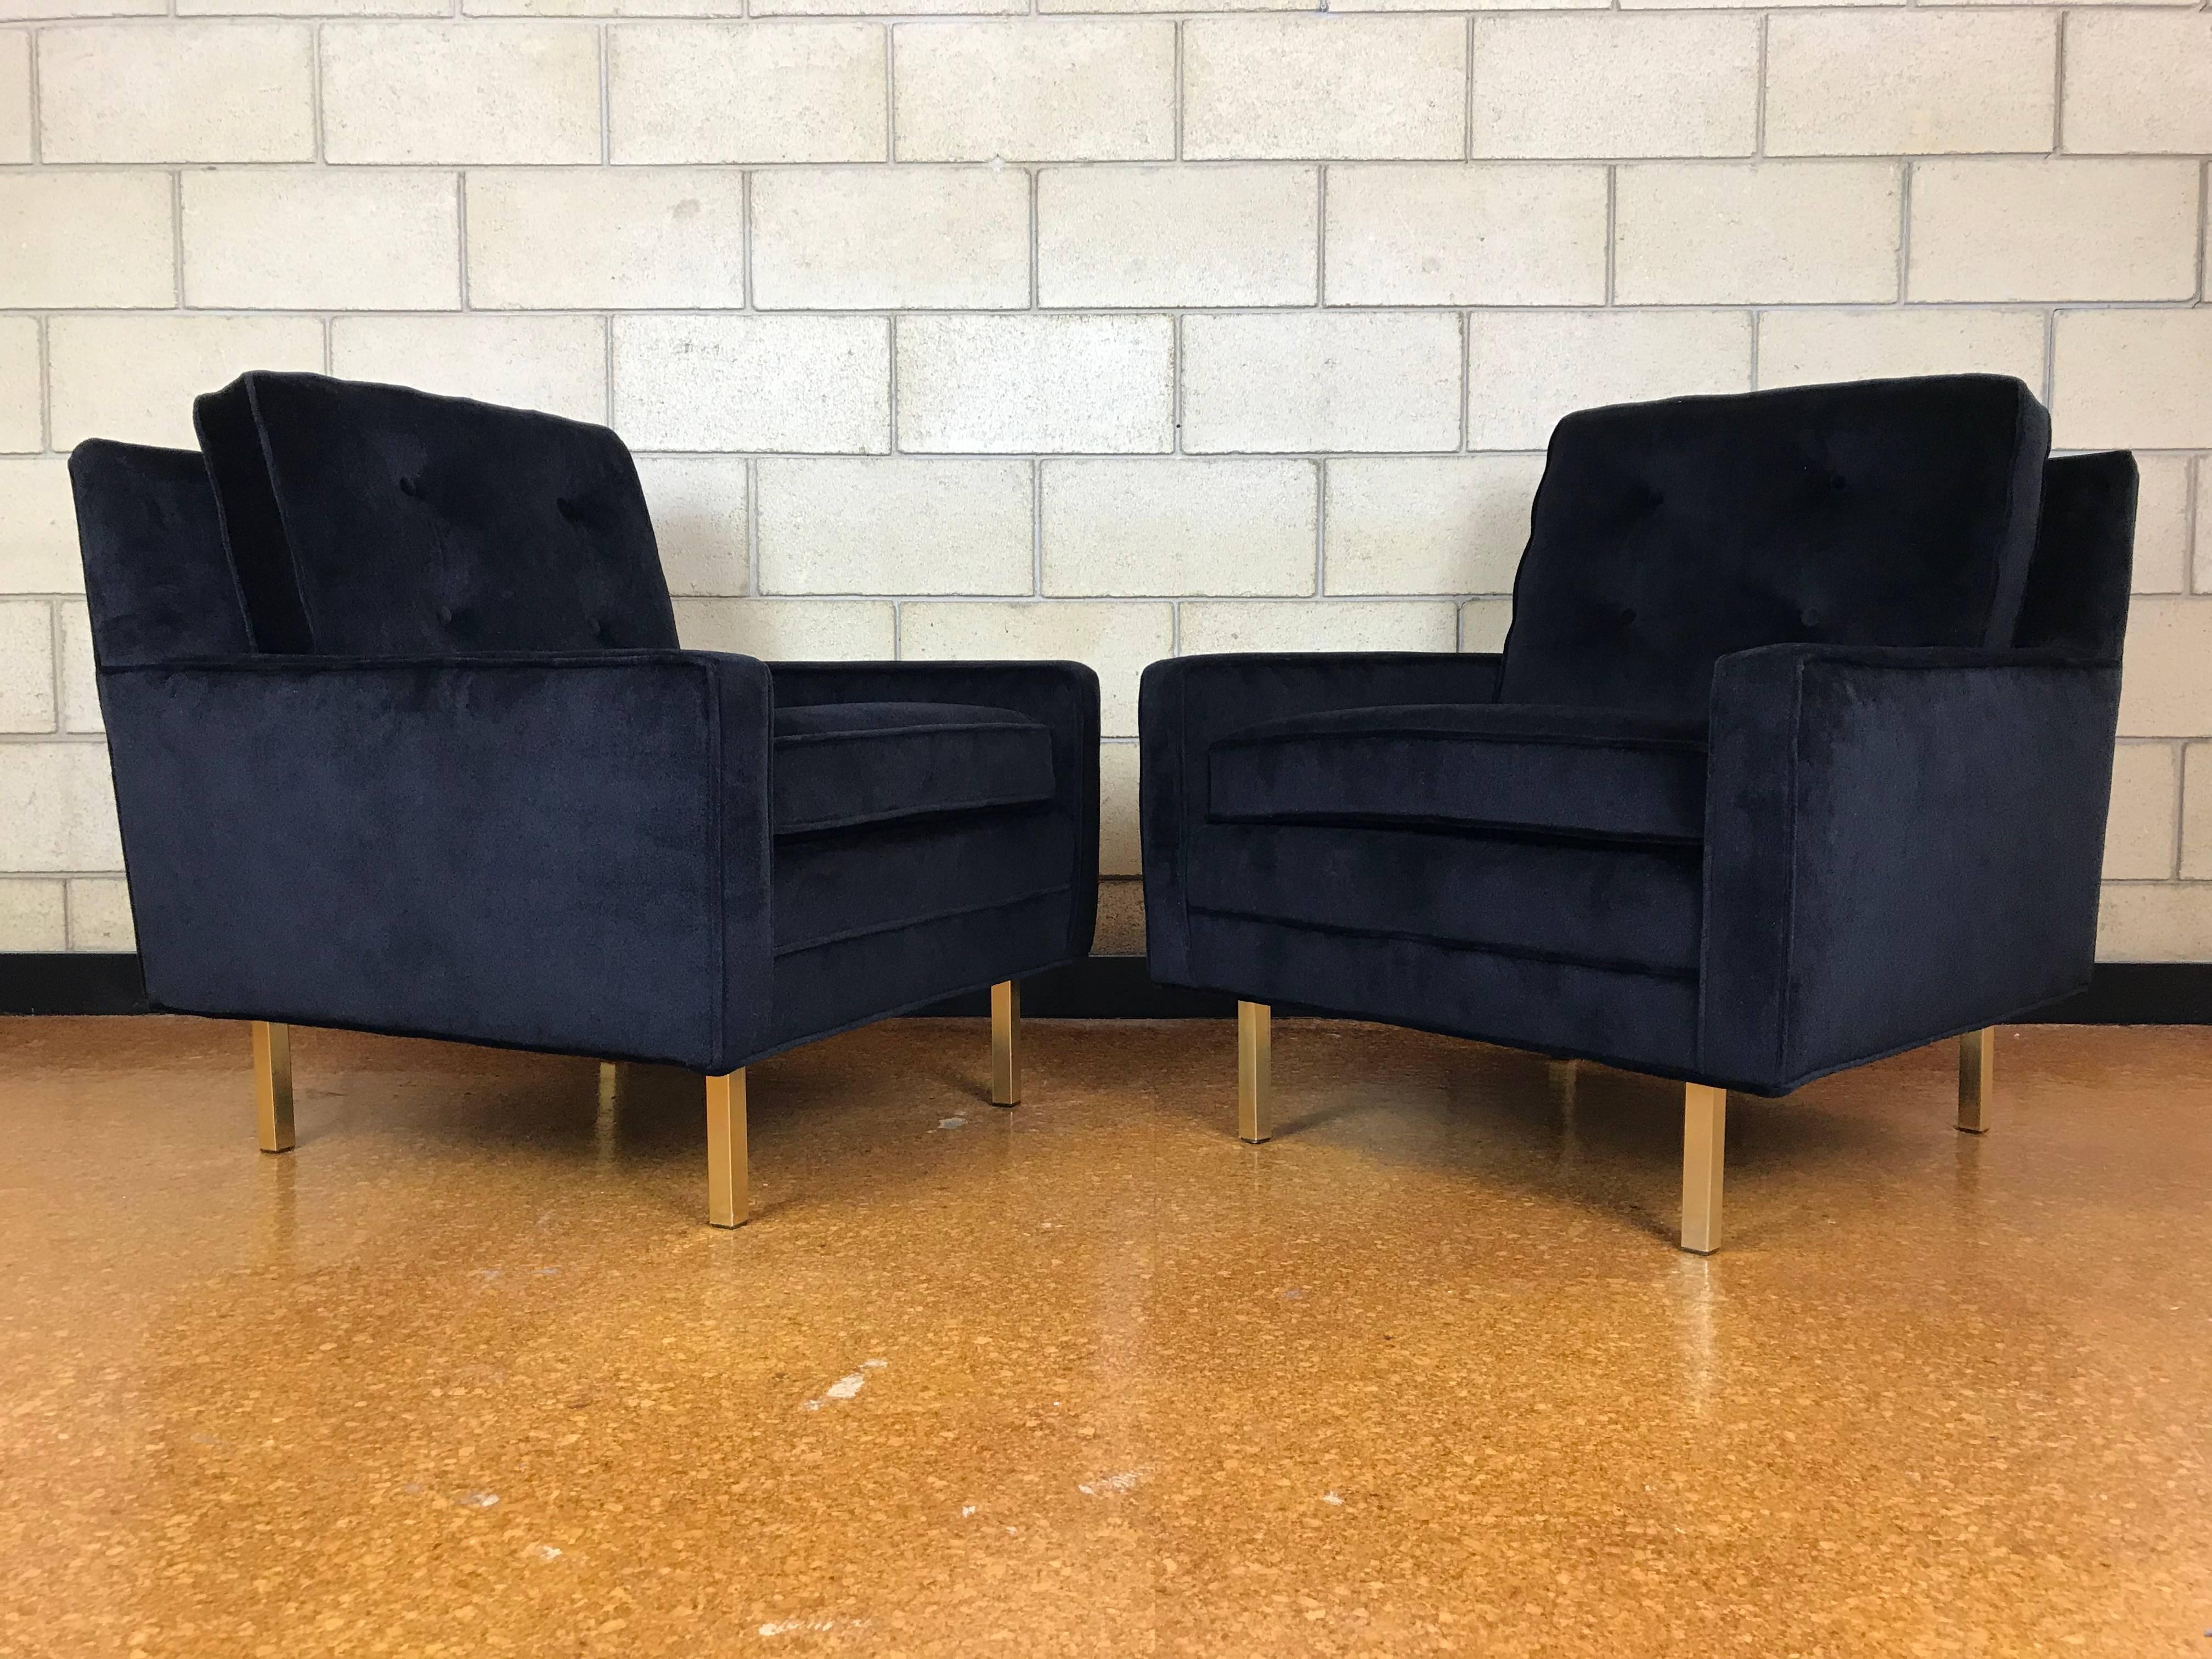 Pair of Mid-Century Modern Tuxedo Lounge Chairs in Black Velvet with Brass Legs 4